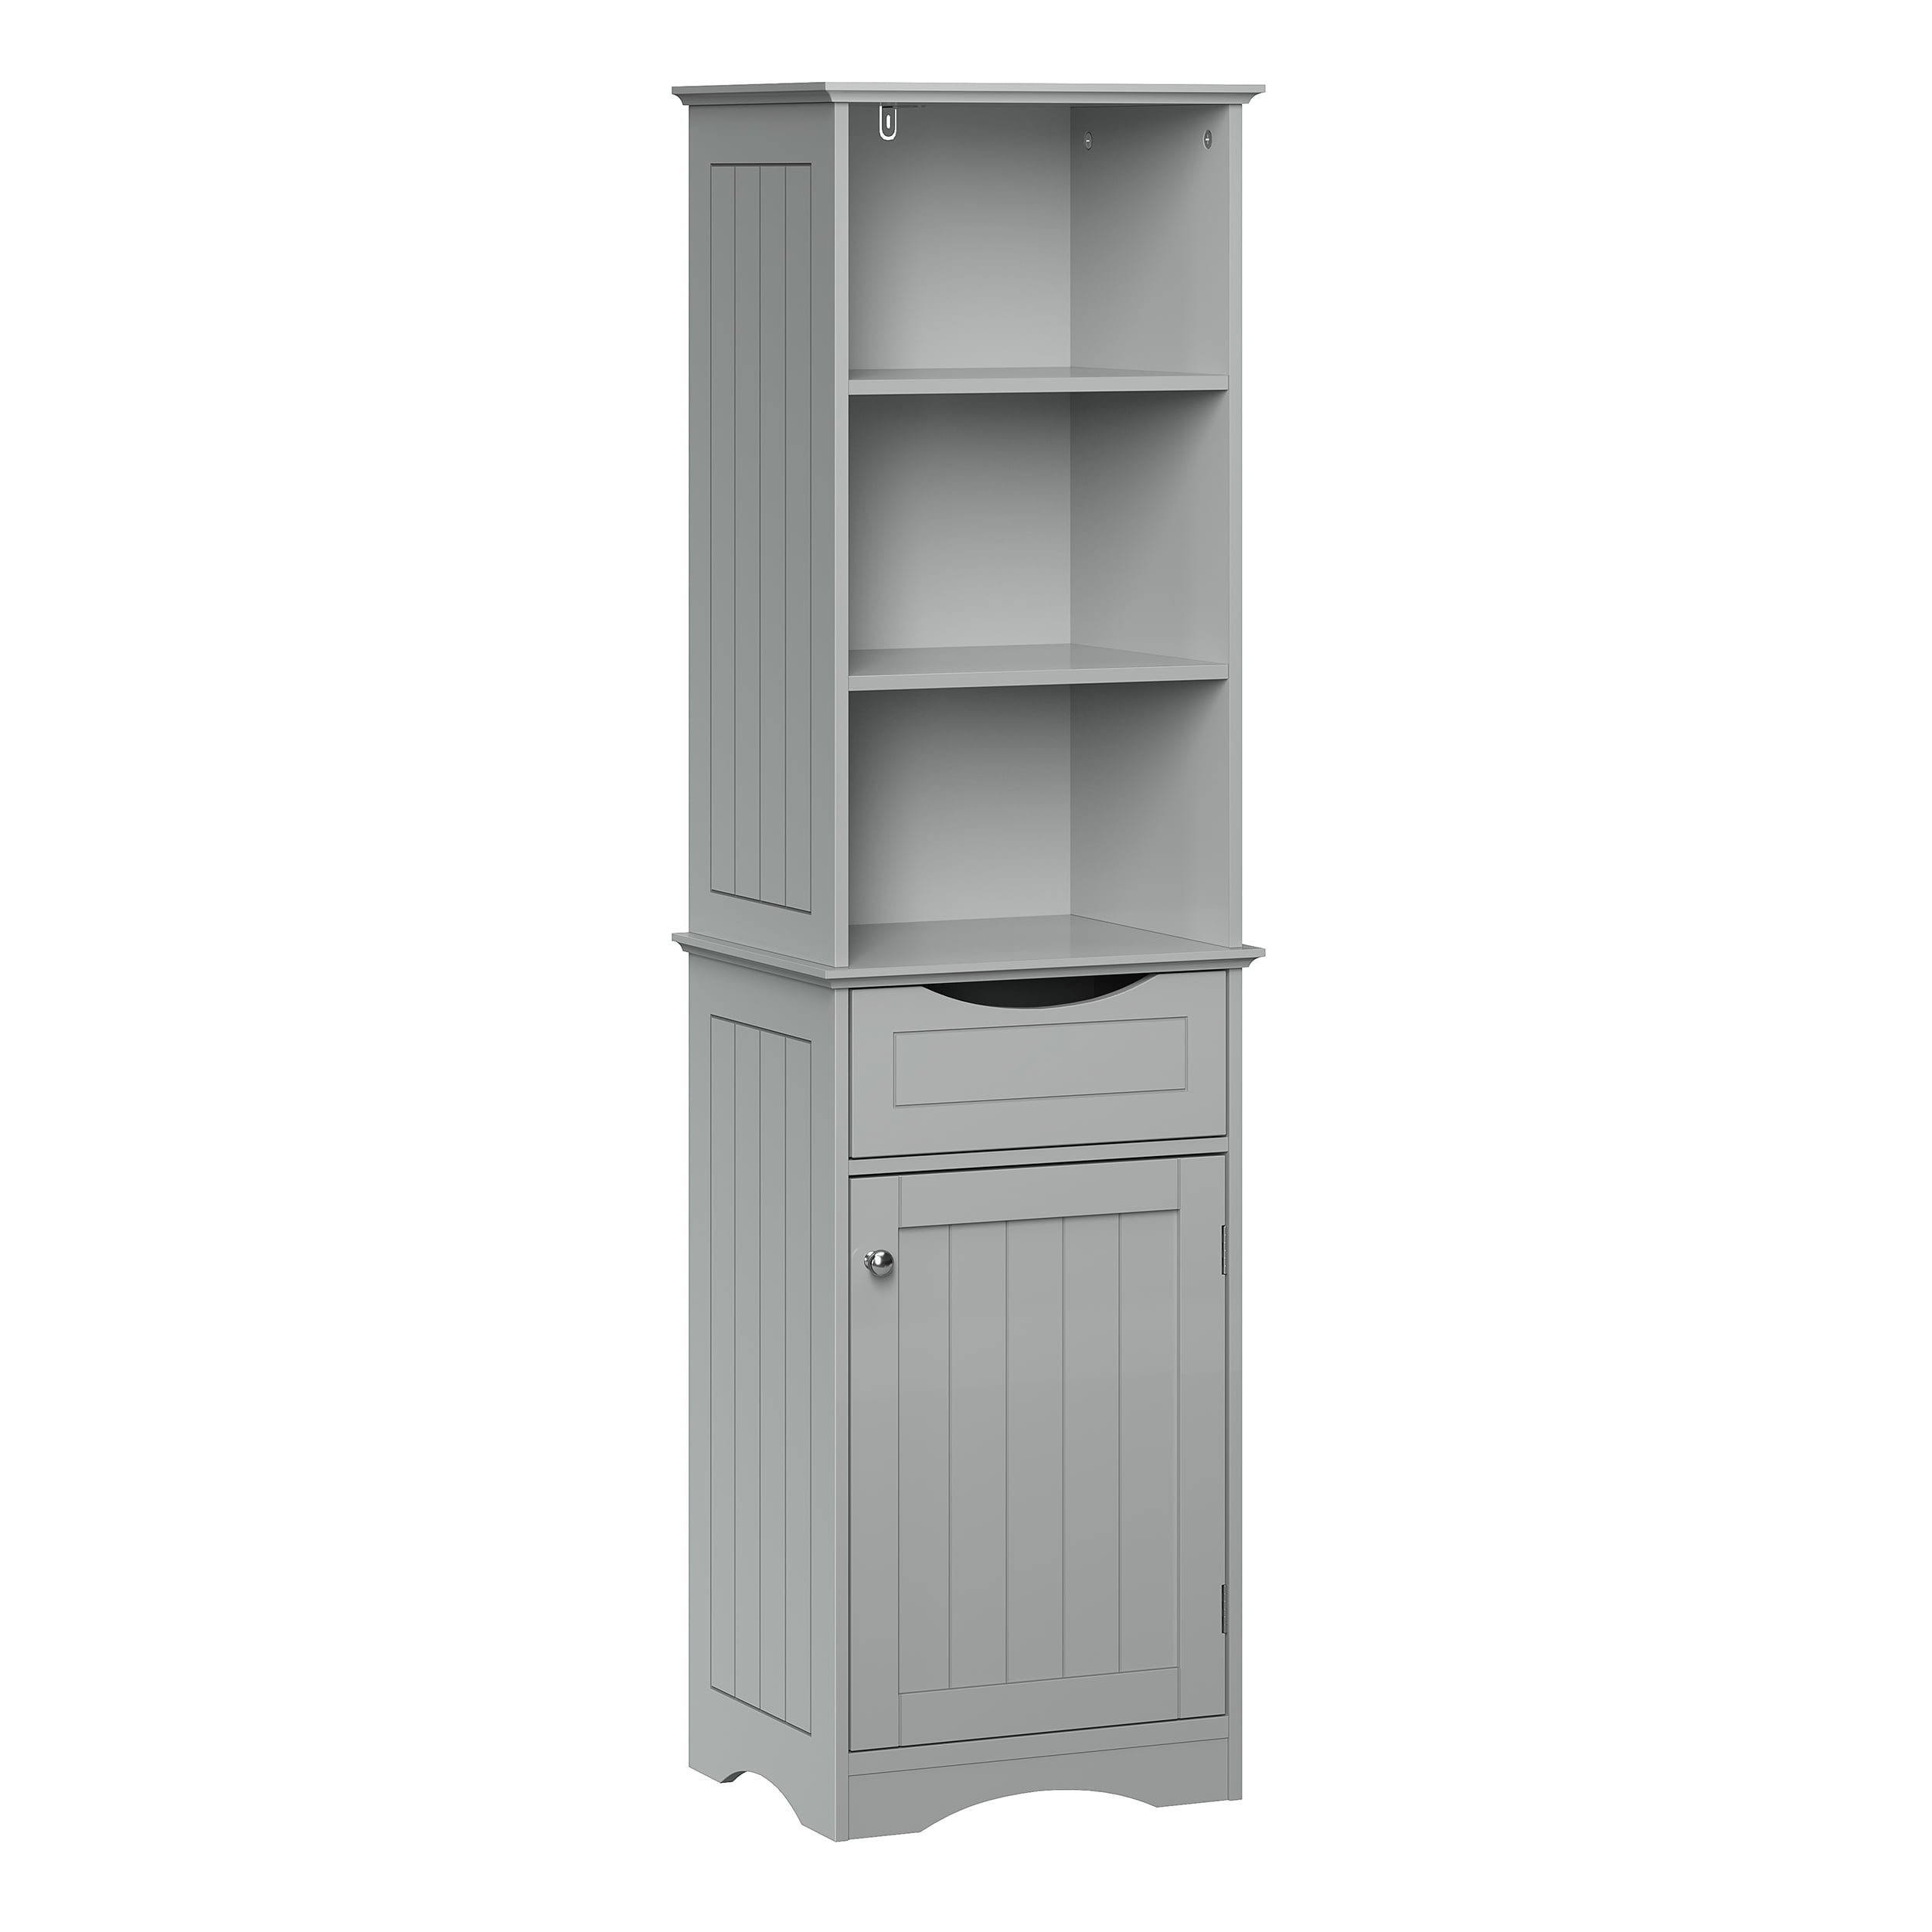 RiverRidge Ashland Collection Tall Cabinet Gray